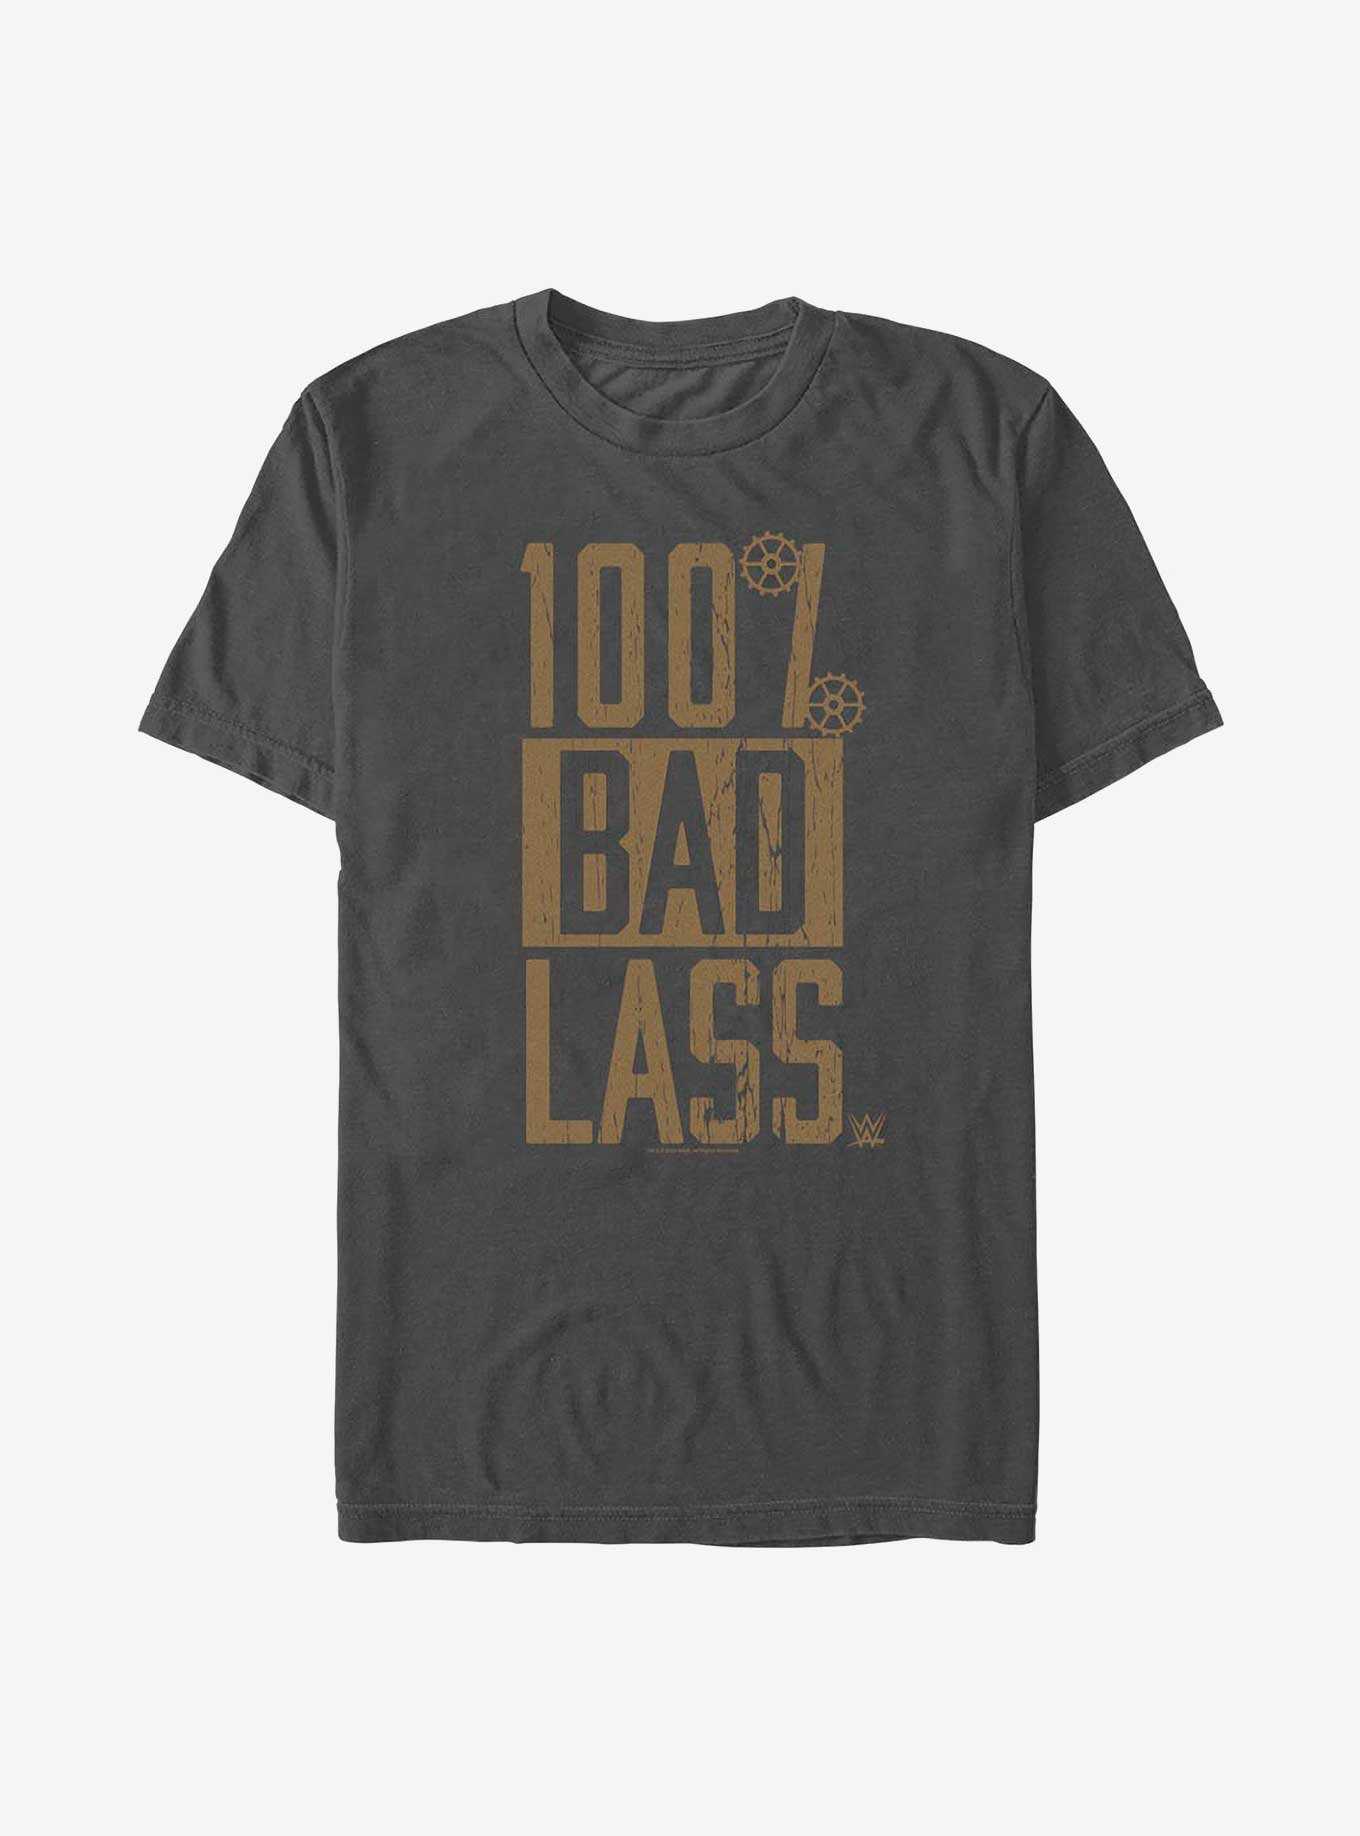 WWE Becky Lynch 100% Bad Lass T-Shirt, , hi-res